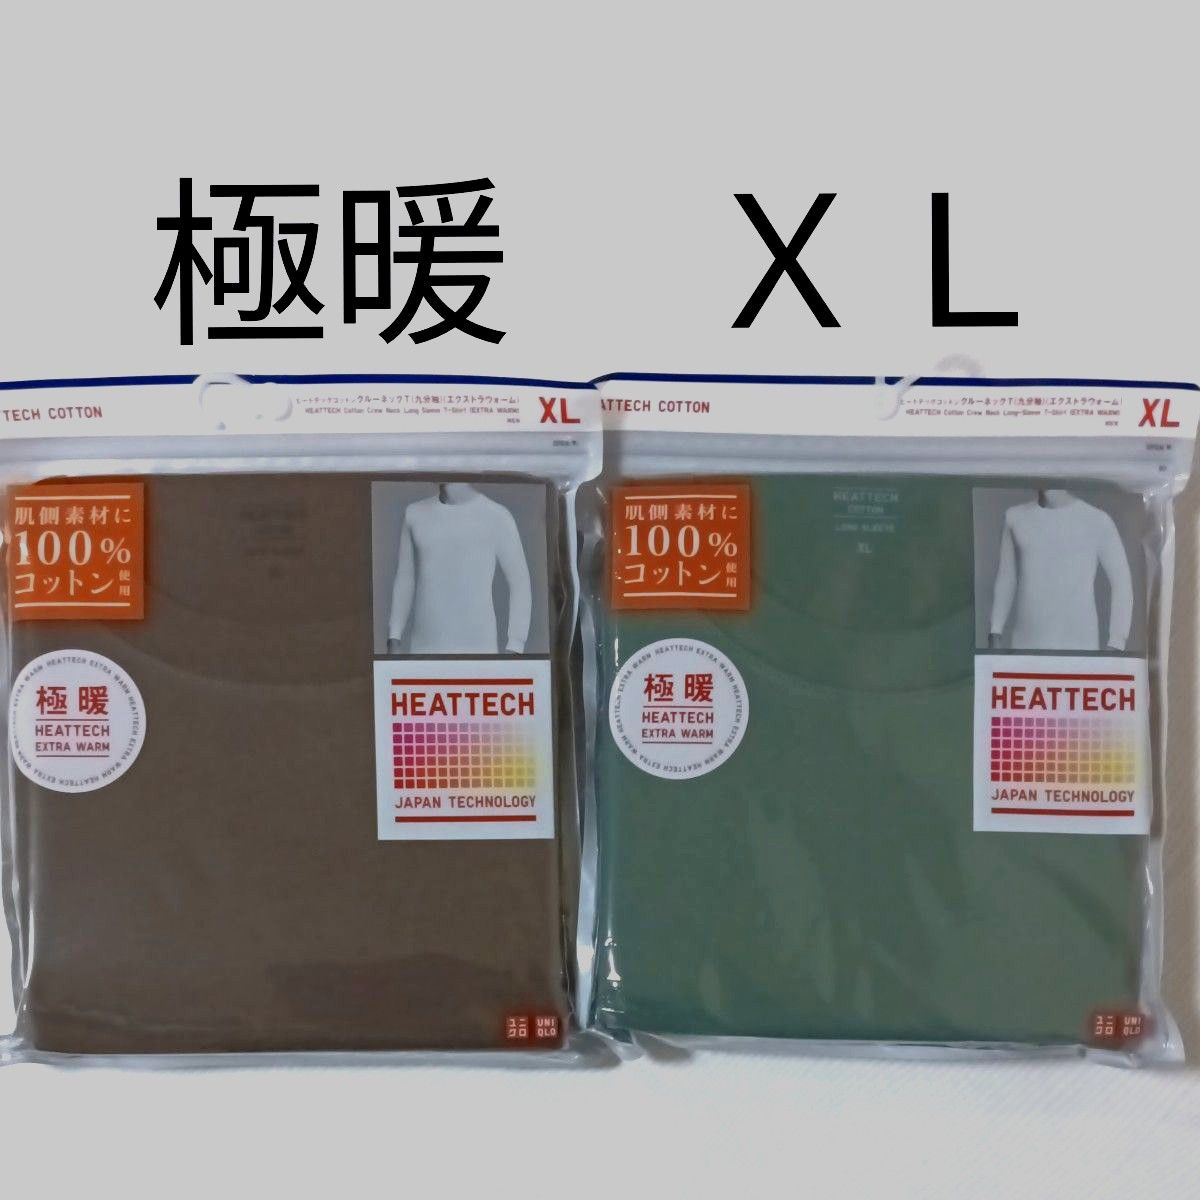 XLサイズ★新品2枚組★ユニクロヒートテックコットンクルーネックＴ 極暖エクストラウォーム九分袖